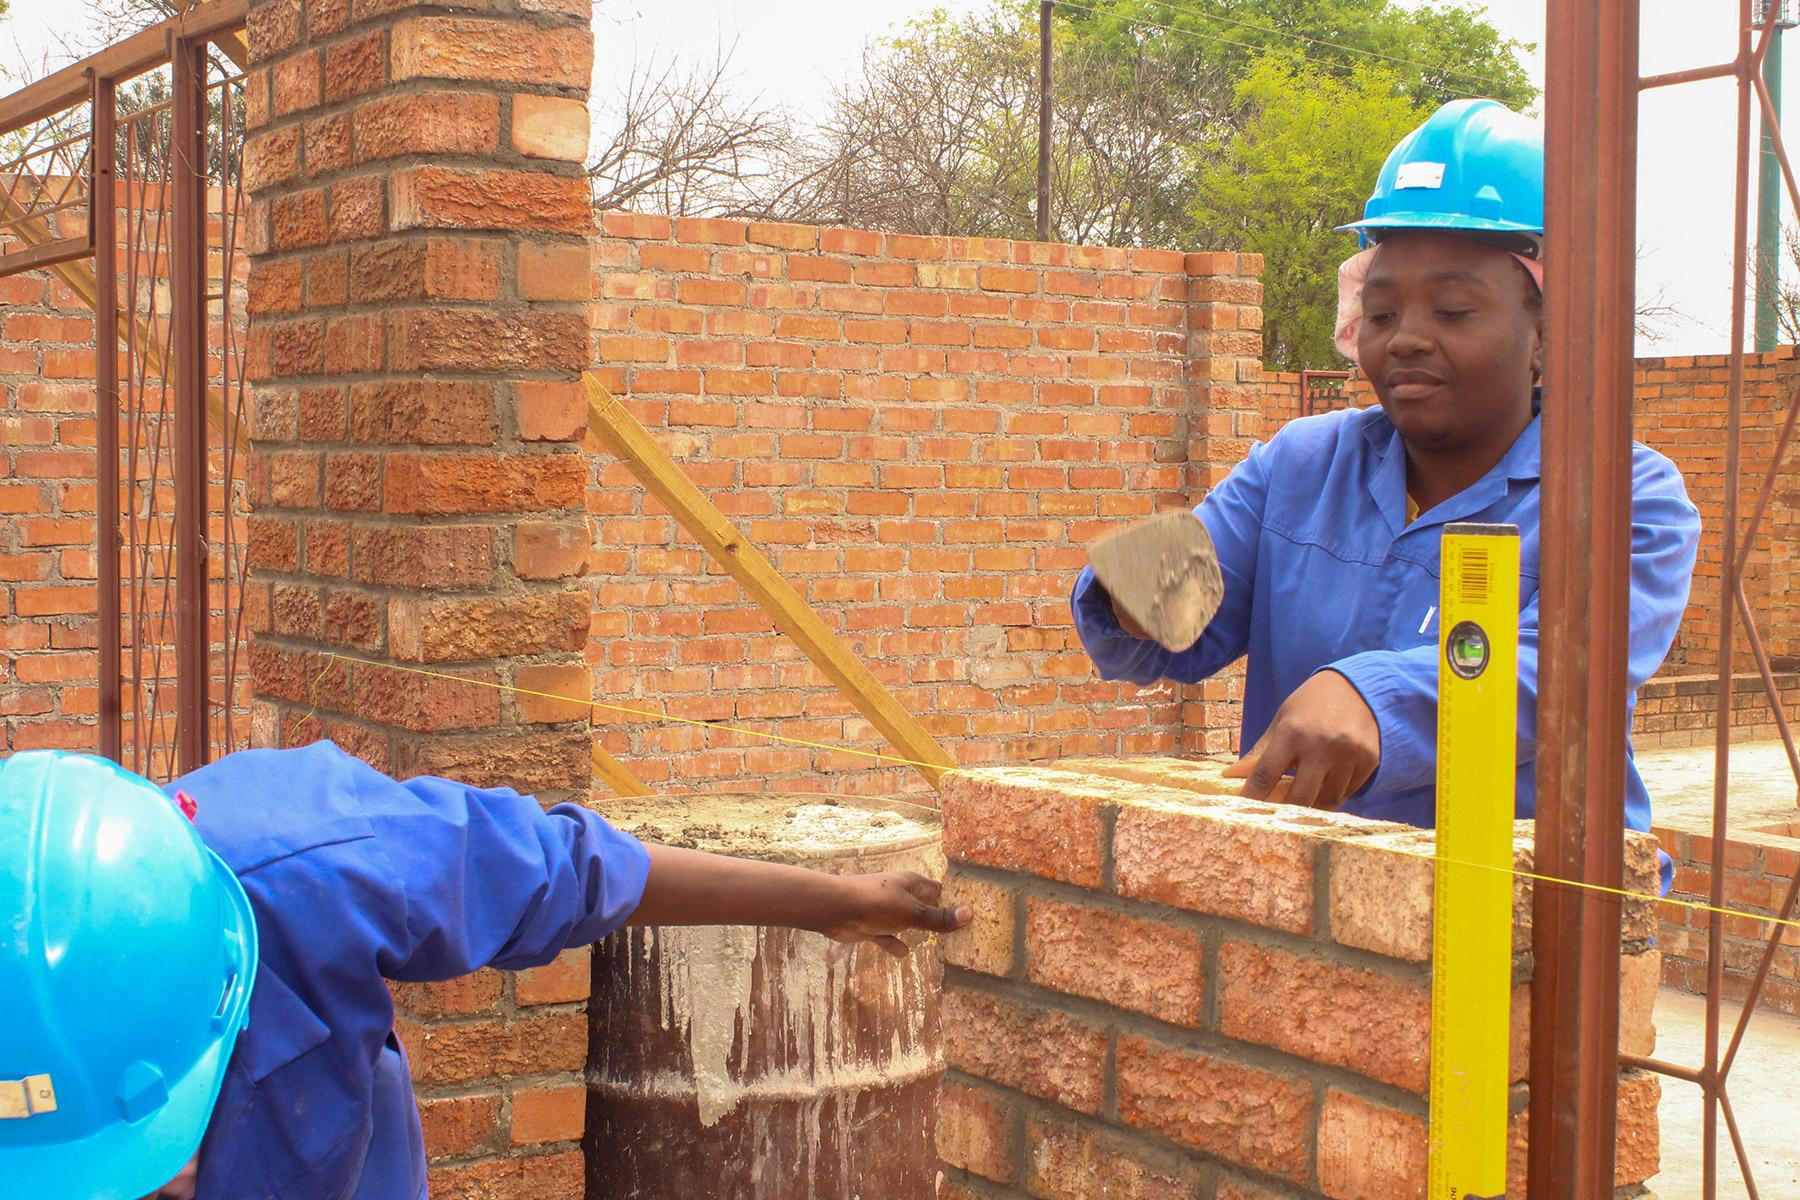 Nomathemba Sibanda displays her masonry skills at the public works site in Filabusi town, southern Zimbabwe. Photo: LWF/Monmo Dahiru Moodi